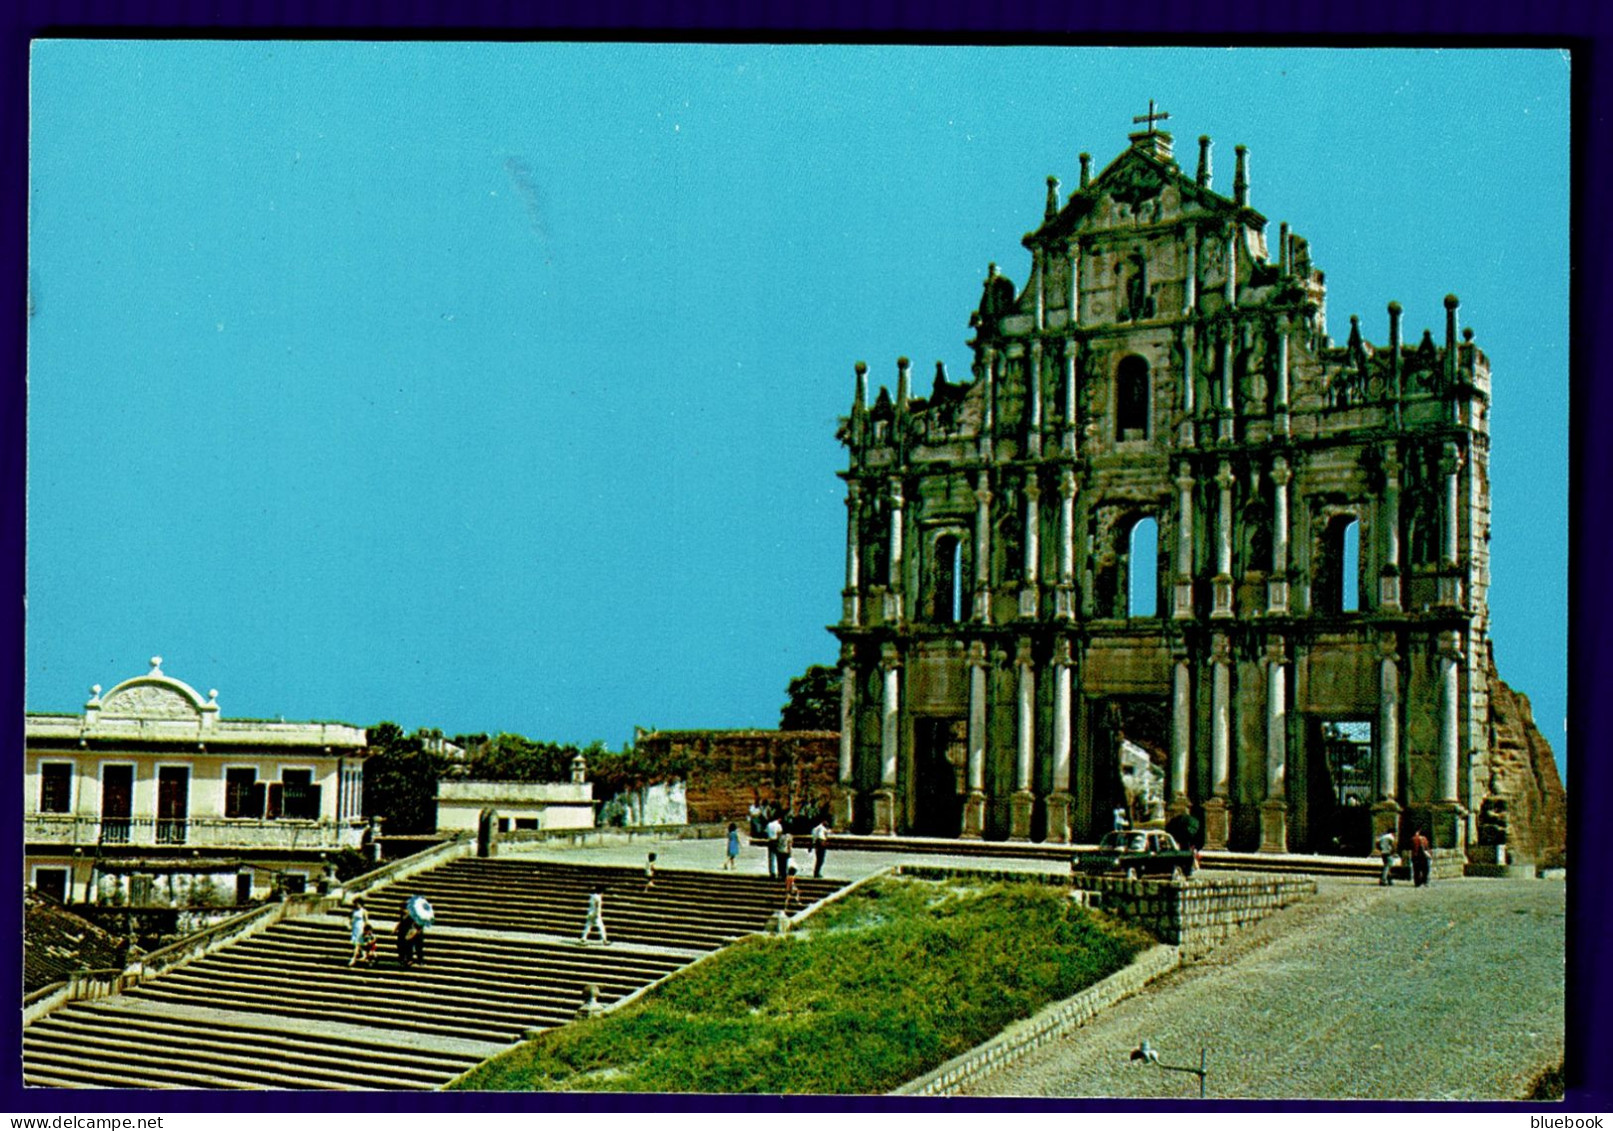 Ref 1647 - Macau Macao Postcard - The Ruins Of St Paul's - Ex Portugal Colony - Macau